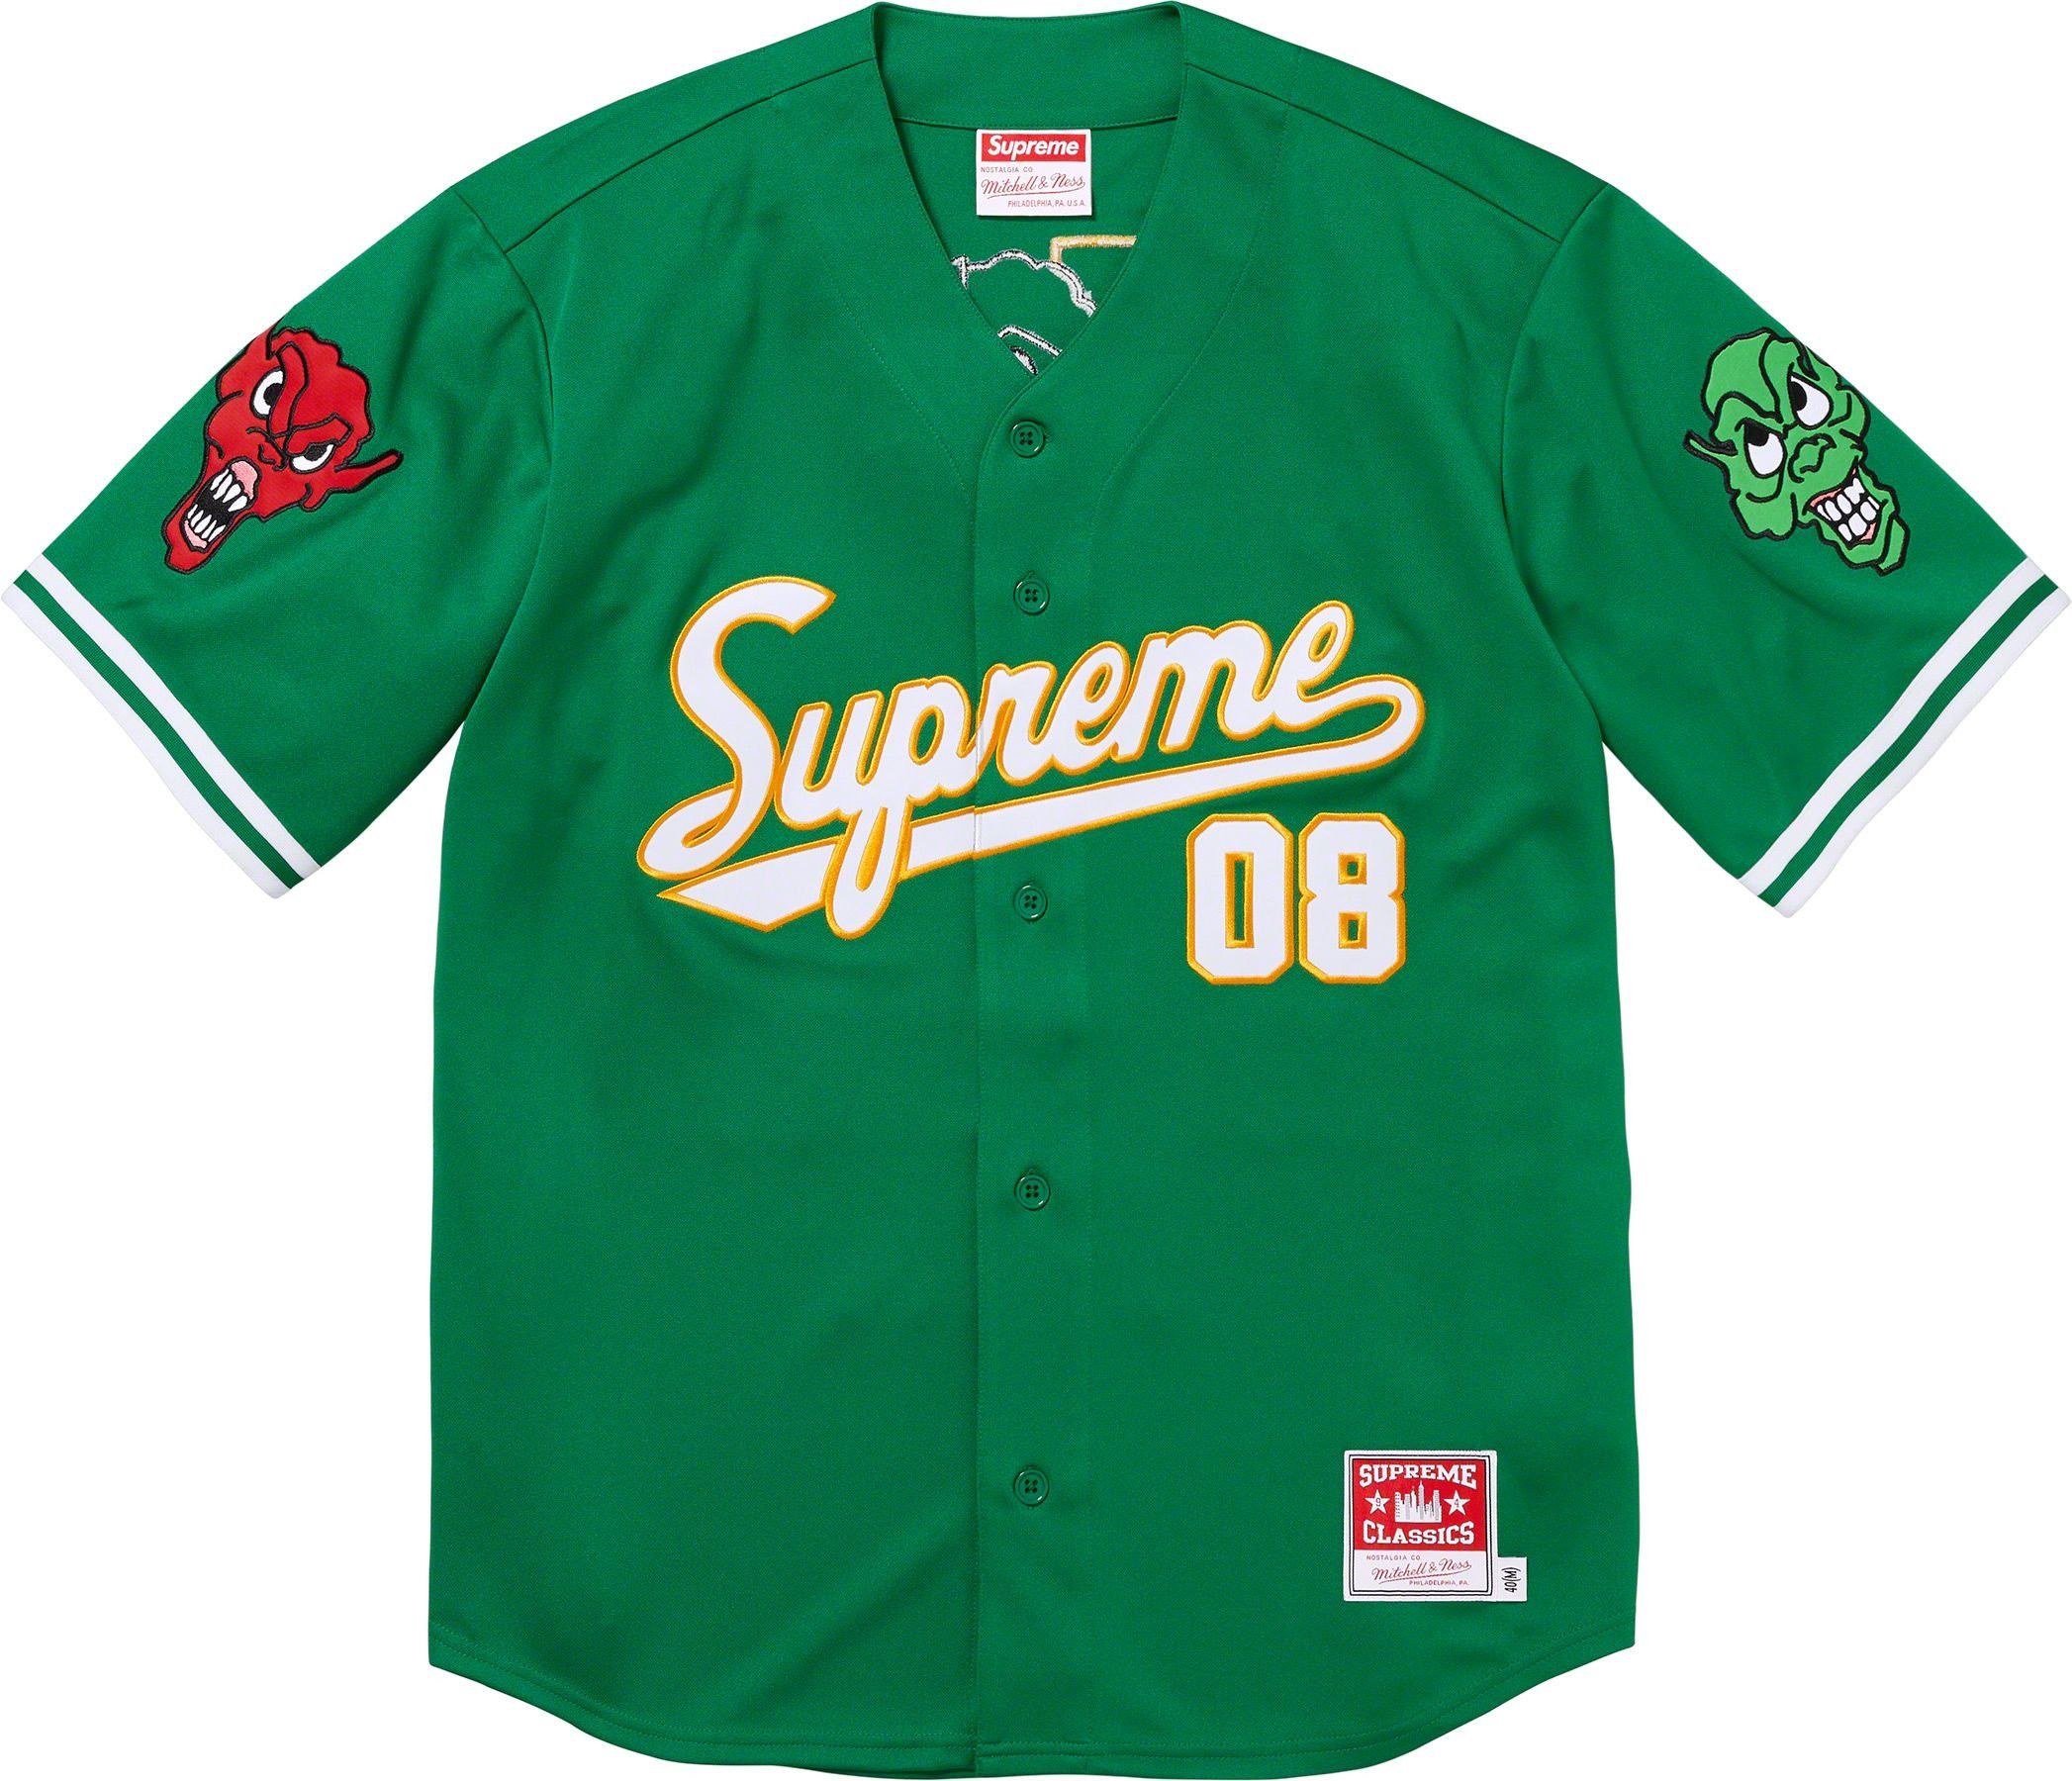 Supreme Supreme x Mitchell u0026 Ness Downtown Hell Baseball Jersey | Grailed